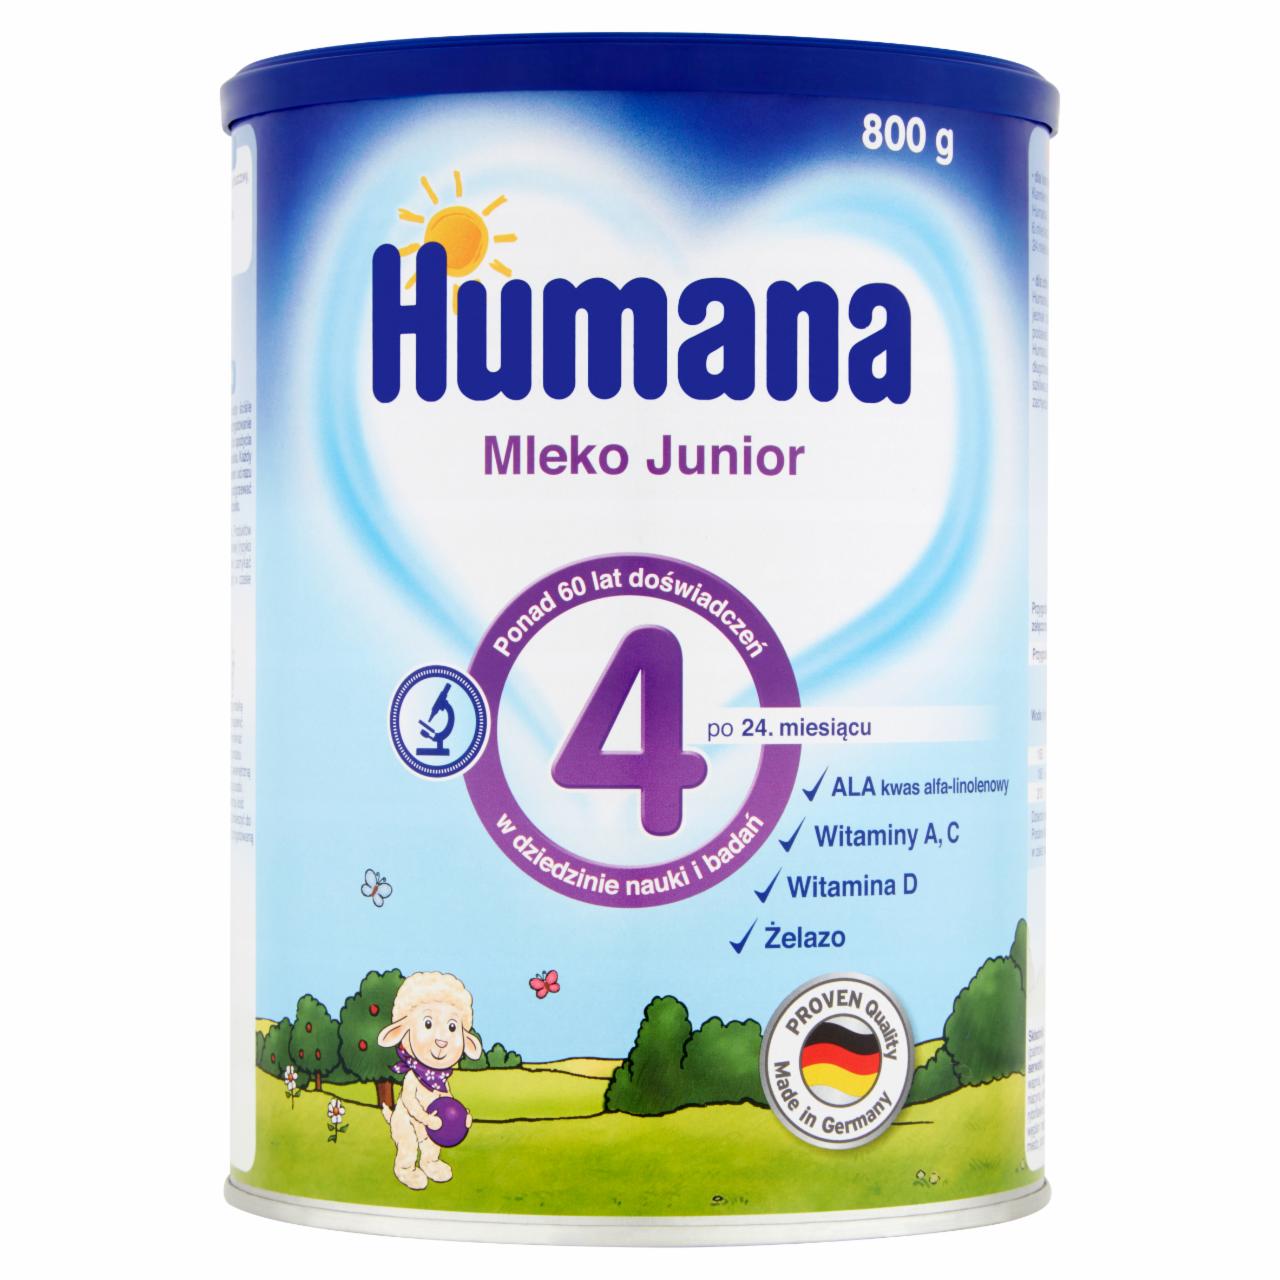 Zdjęcia - Humana 4 Mleko Junior po 24. miesiącu 800 g